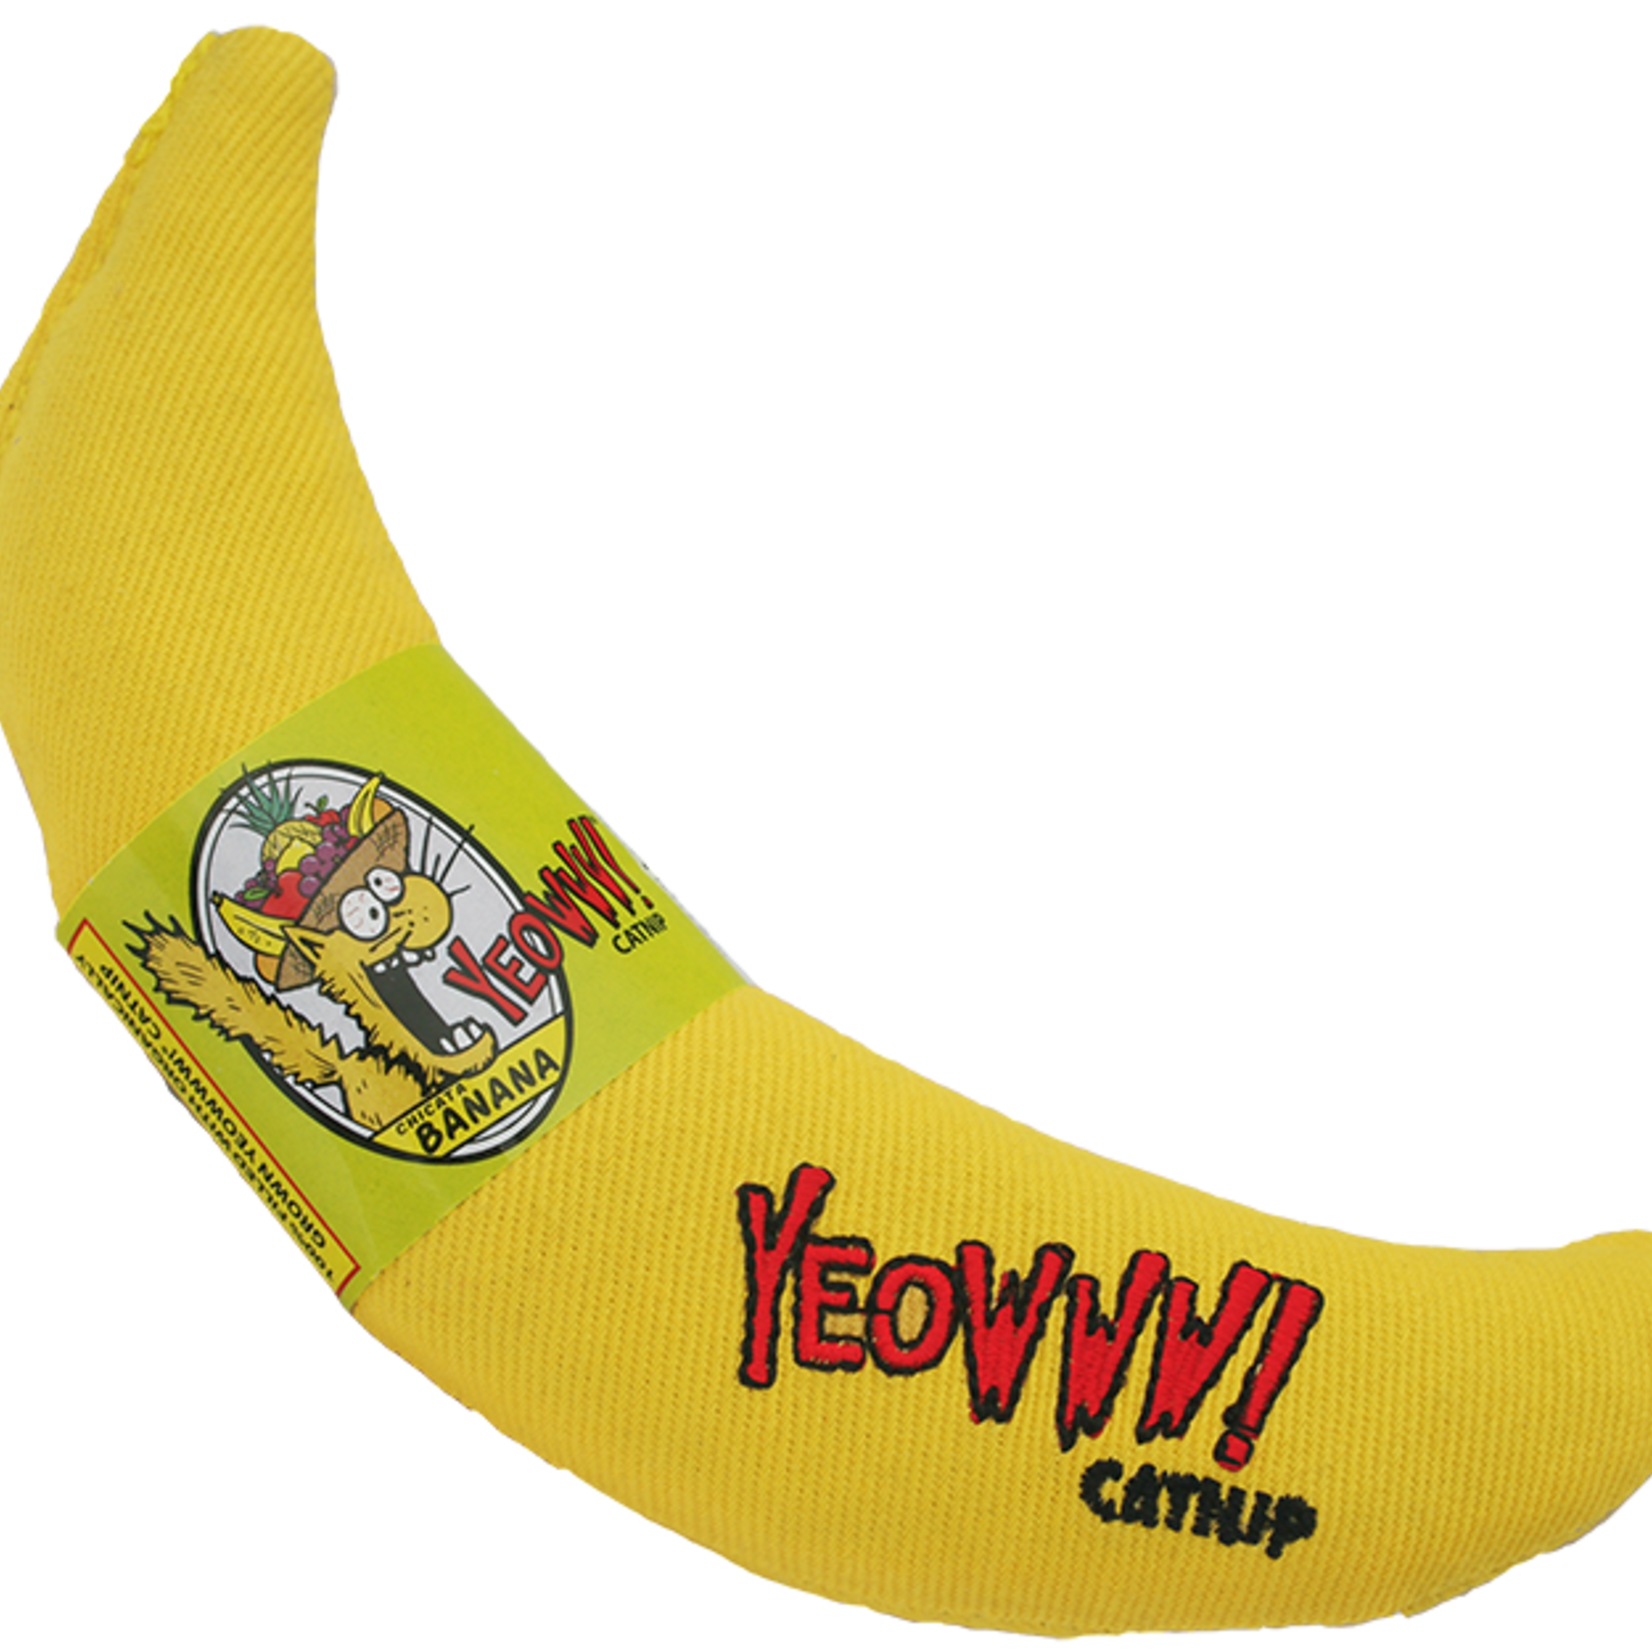 Yeoww Ducky World Inc. Ducky World Yeow! Banana